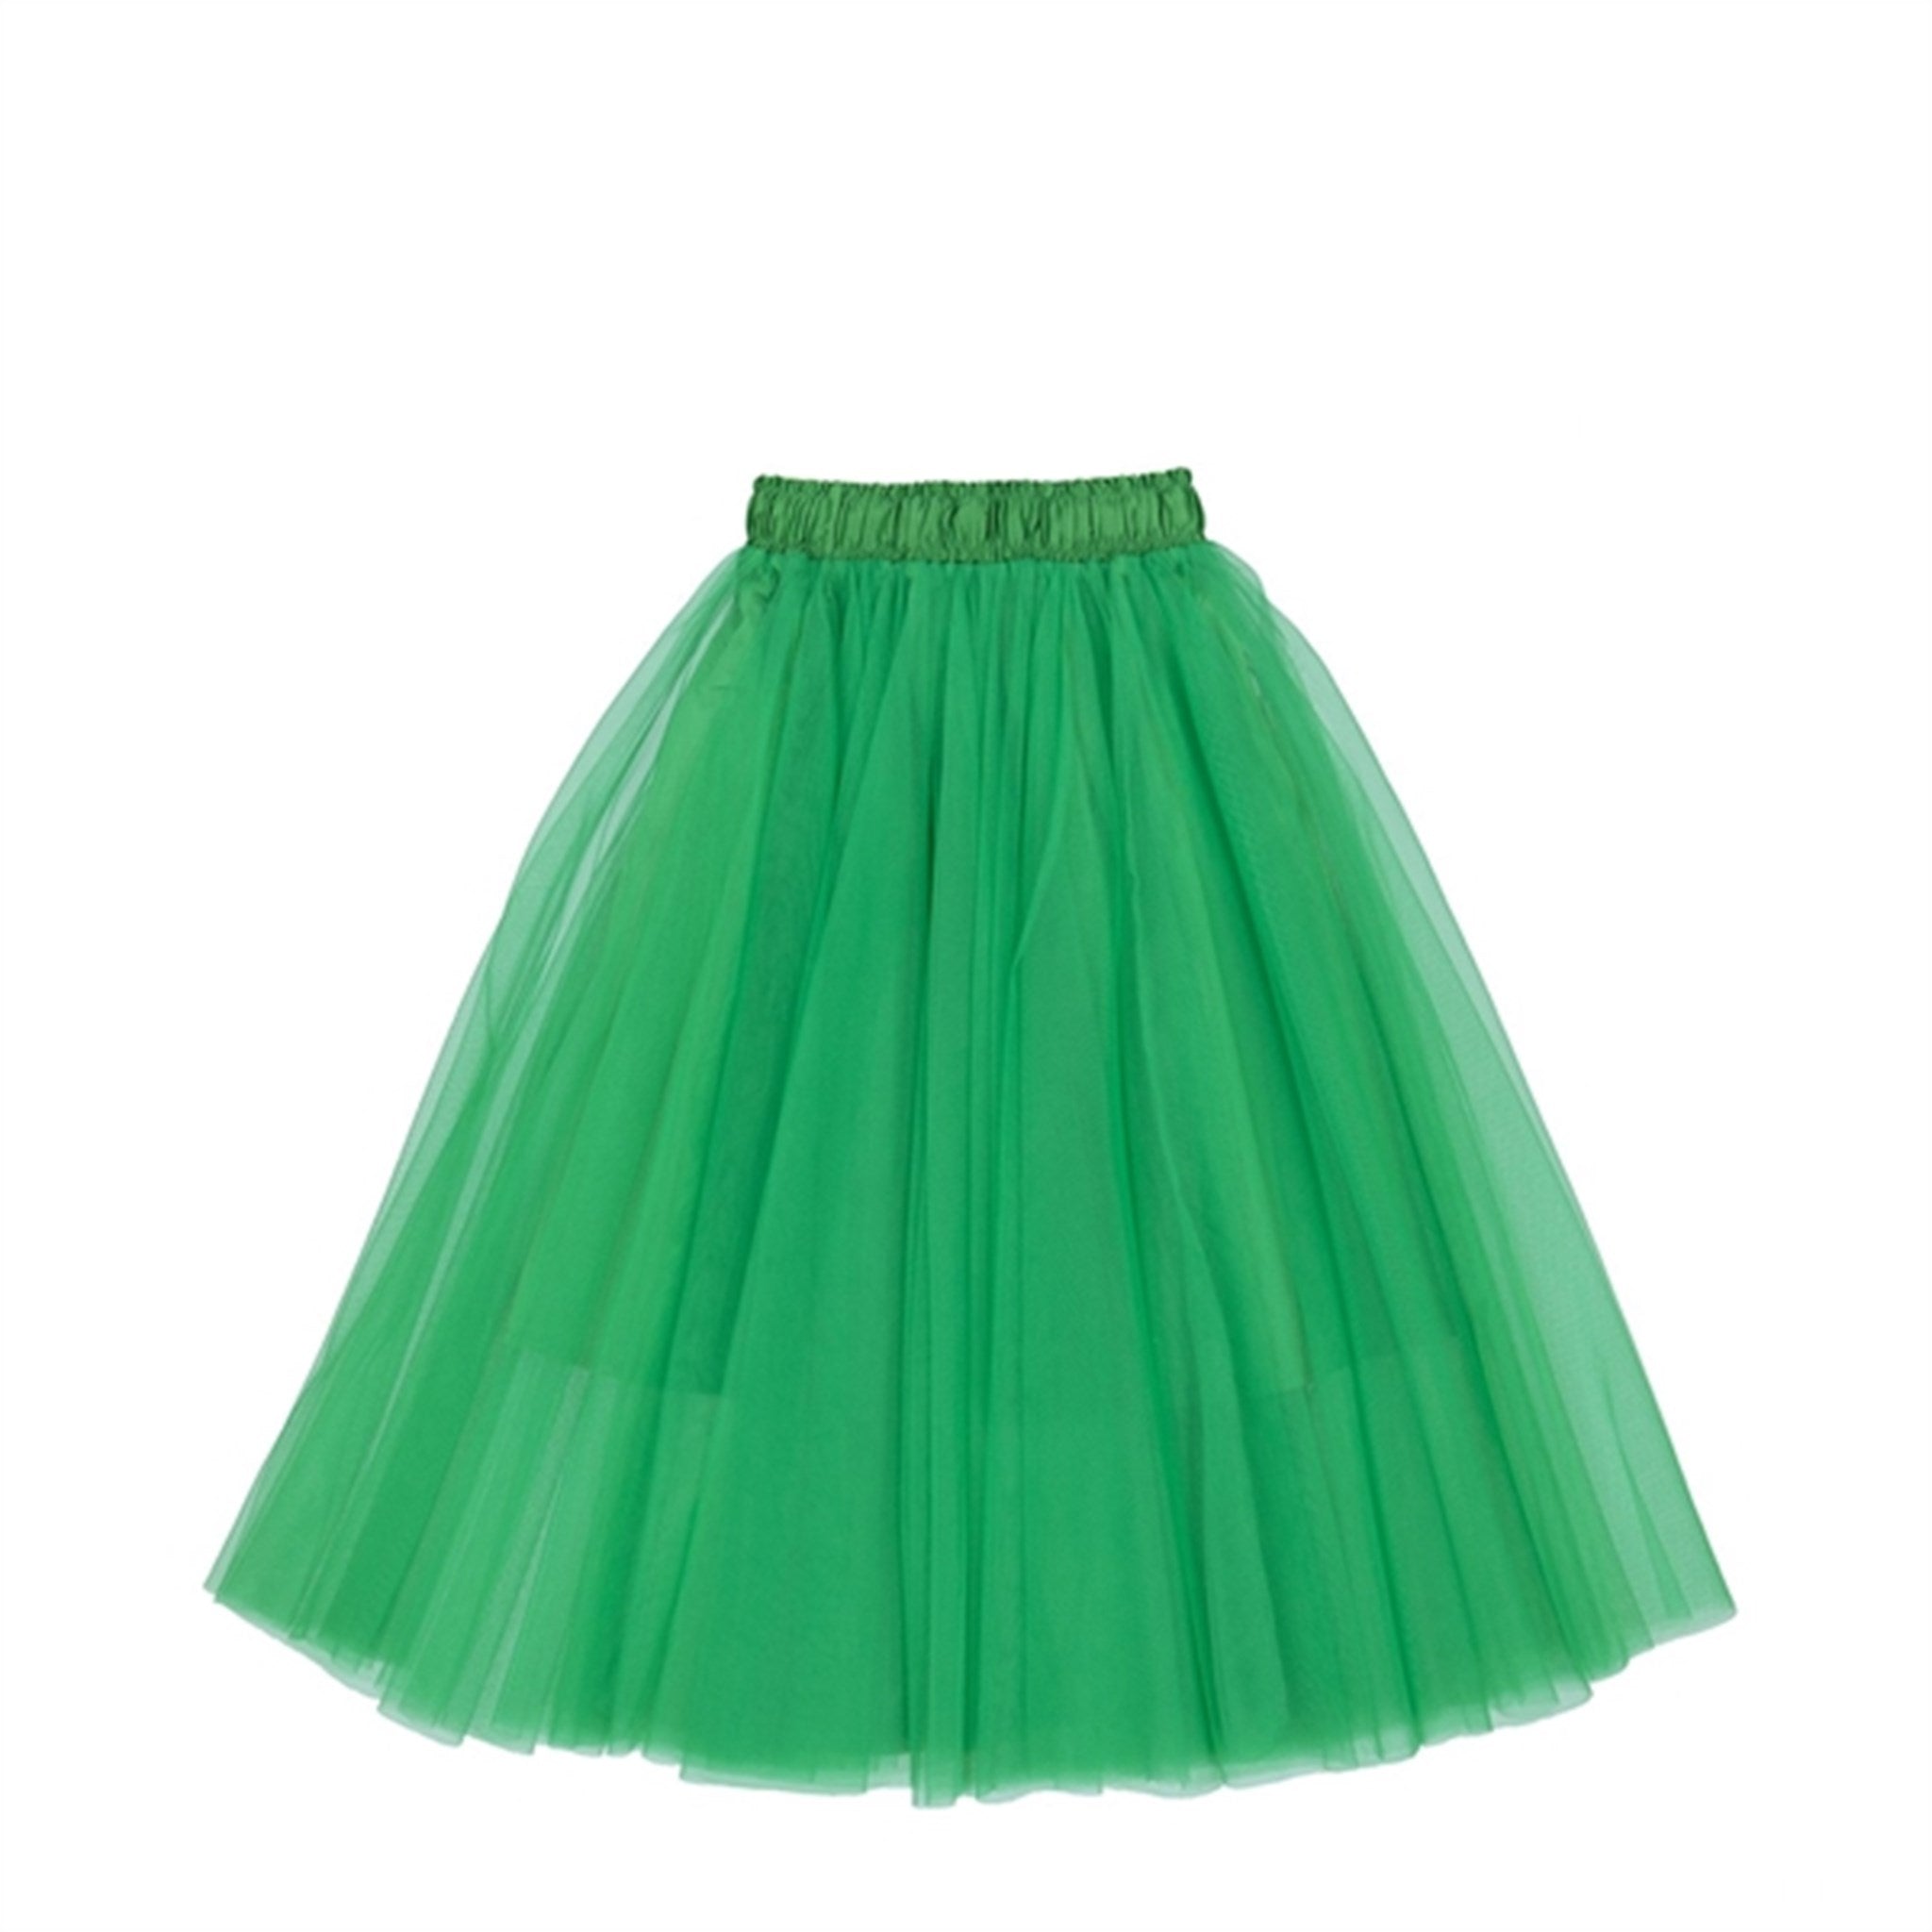 The New Bright Green Heaven Skirt 5